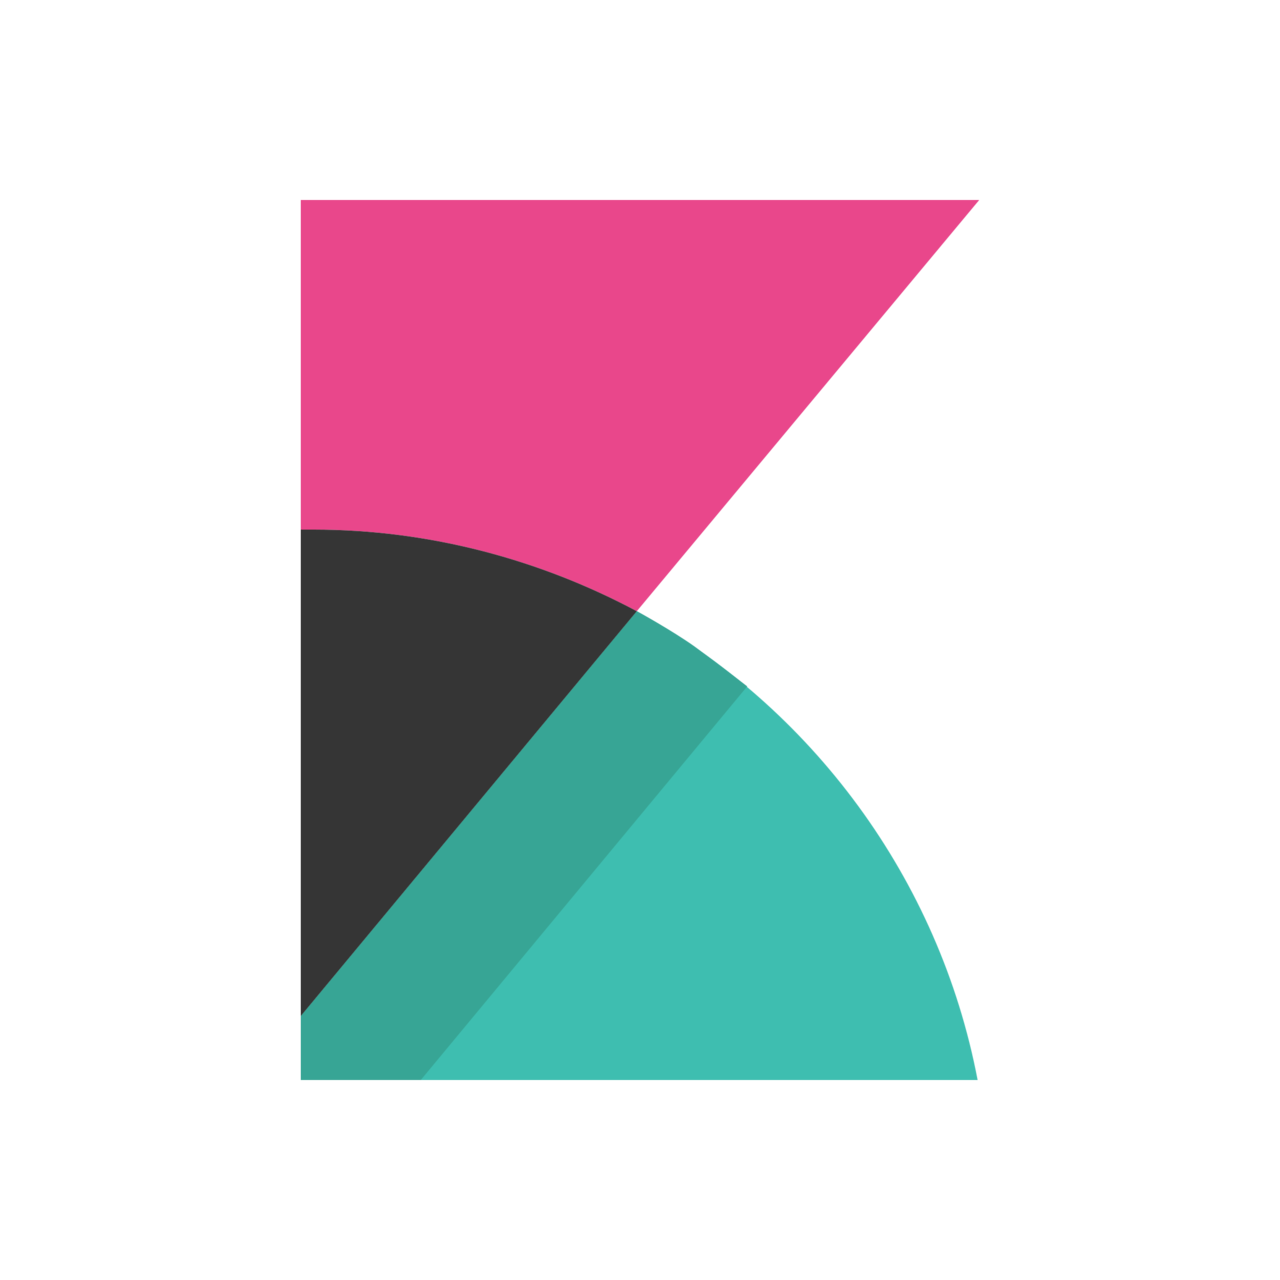 elastic-kibana-logo